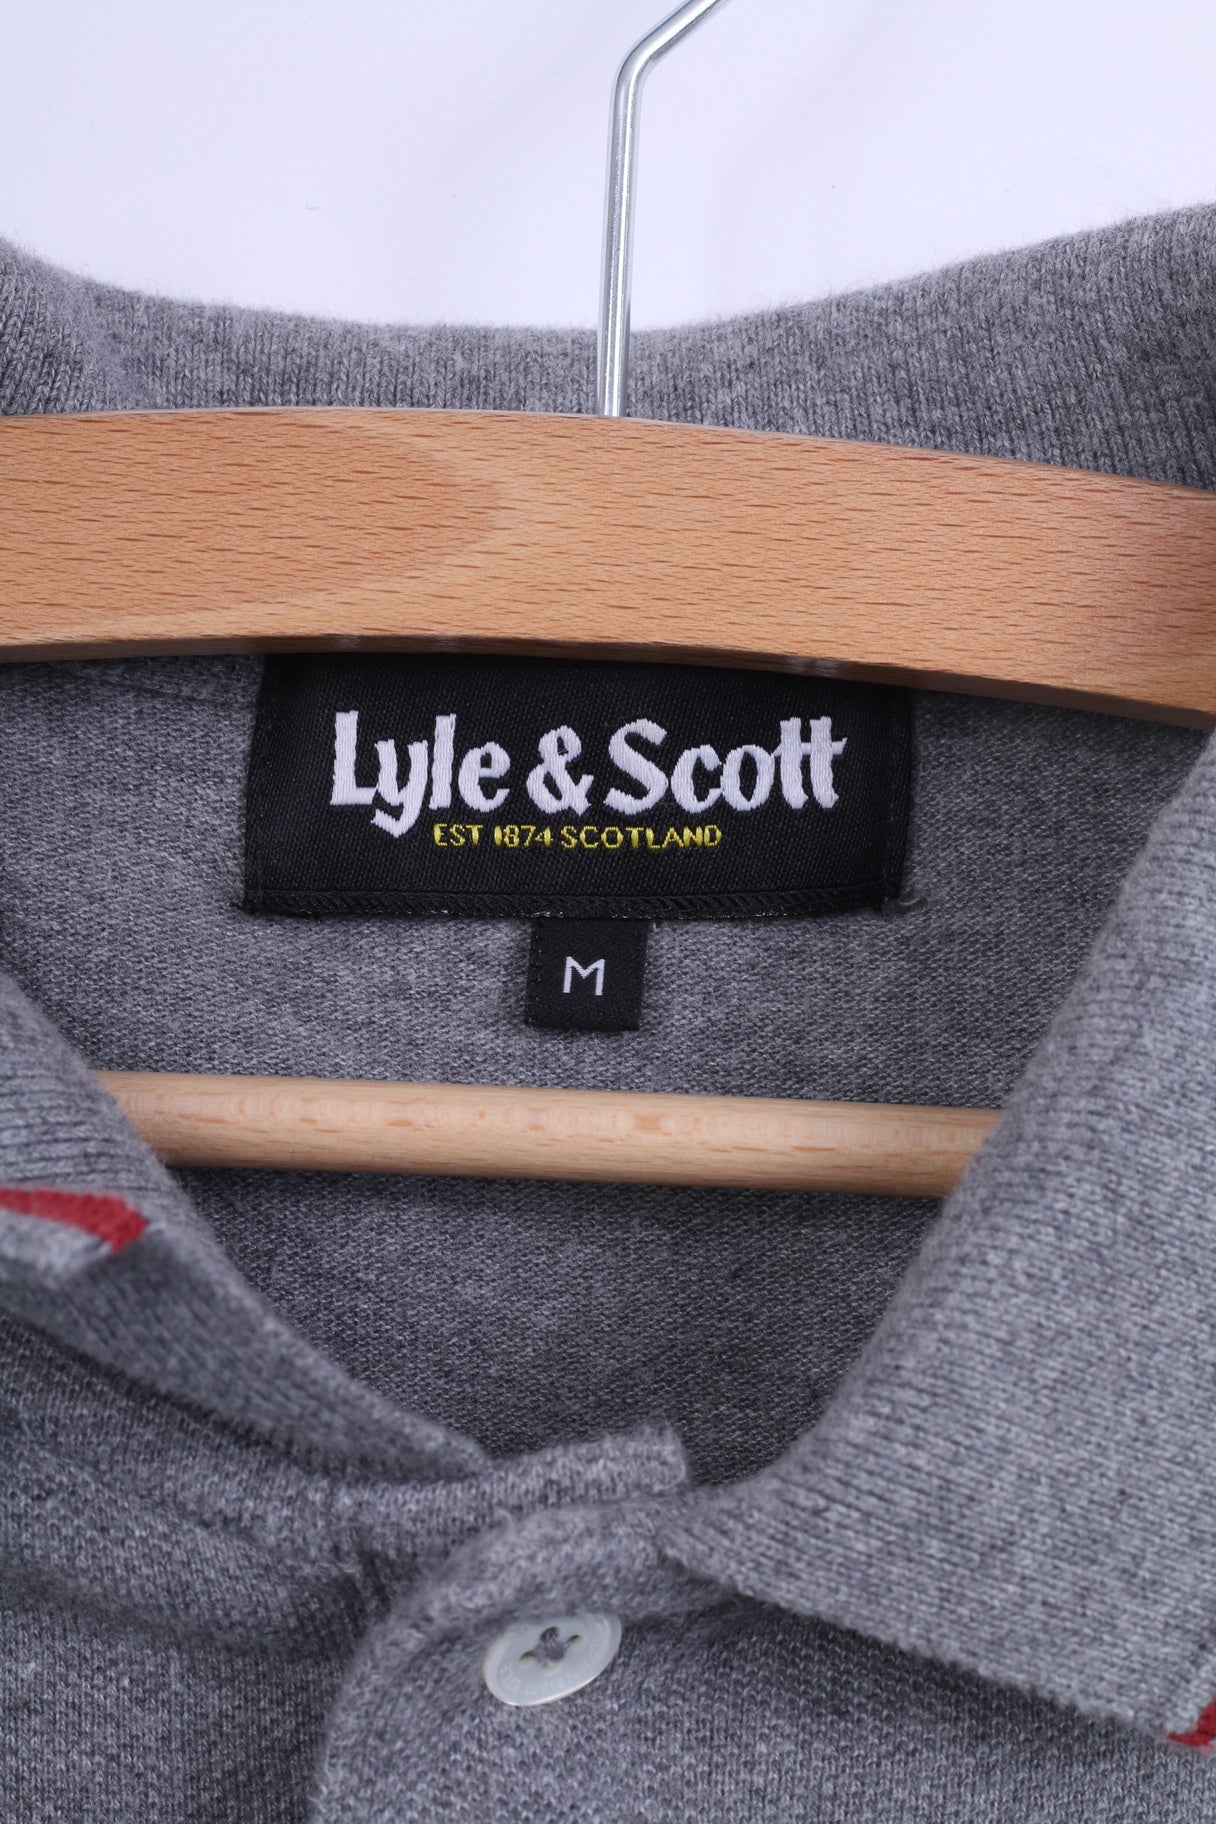 Lyle & Scott Mens M (S) Polo Shirt Grey Cotton Scotland Short Sleeve